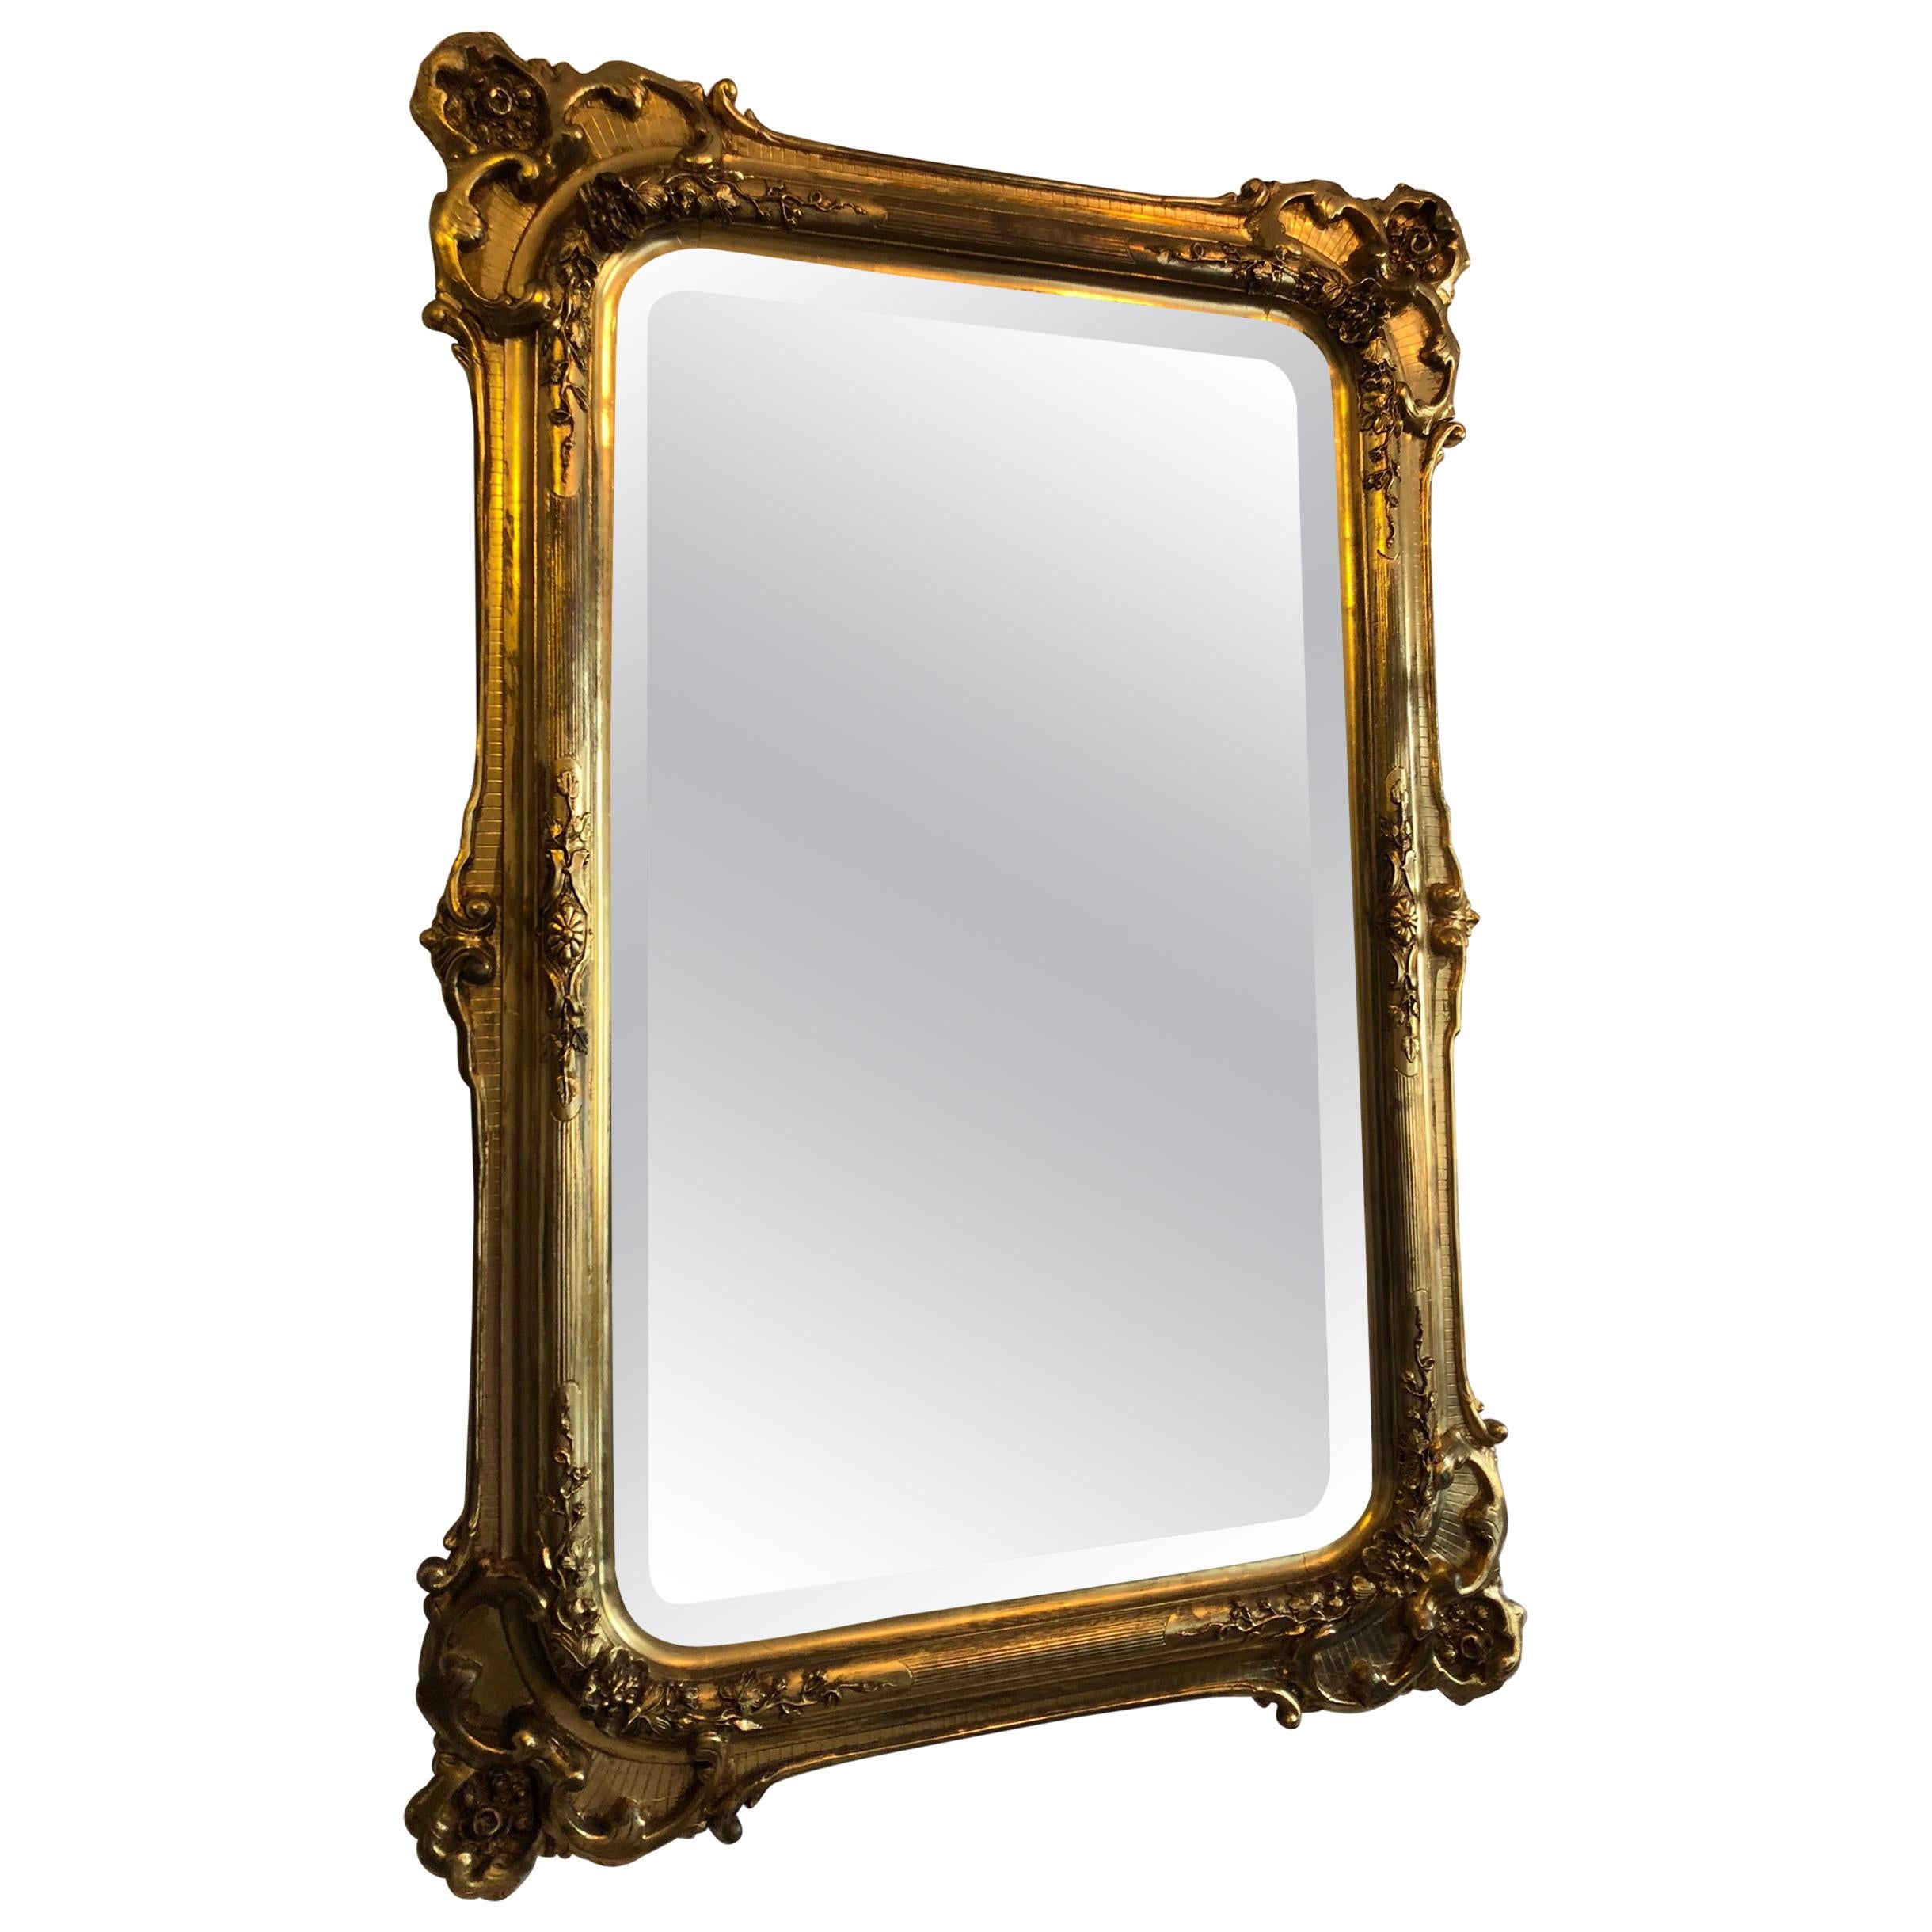 Original Florentine 1860s Antique Mirror, Wooden Gilded Frame For Sale